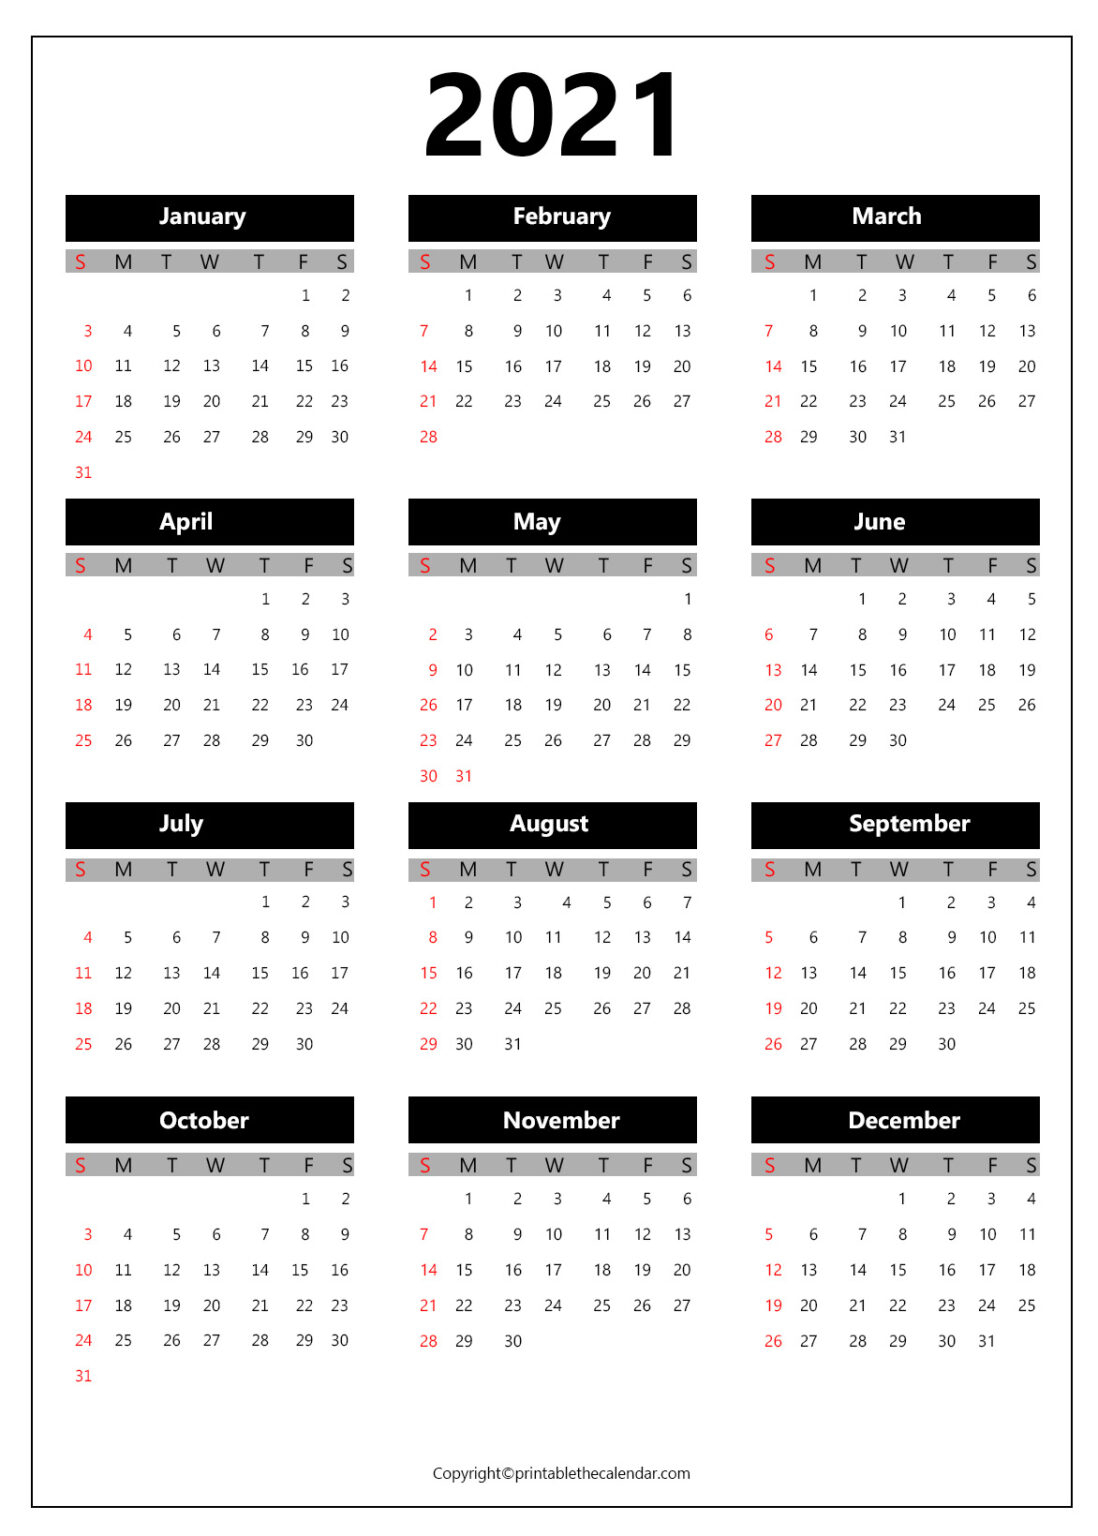 Blank Calendar 2021 Pdf | Printable The Calendar